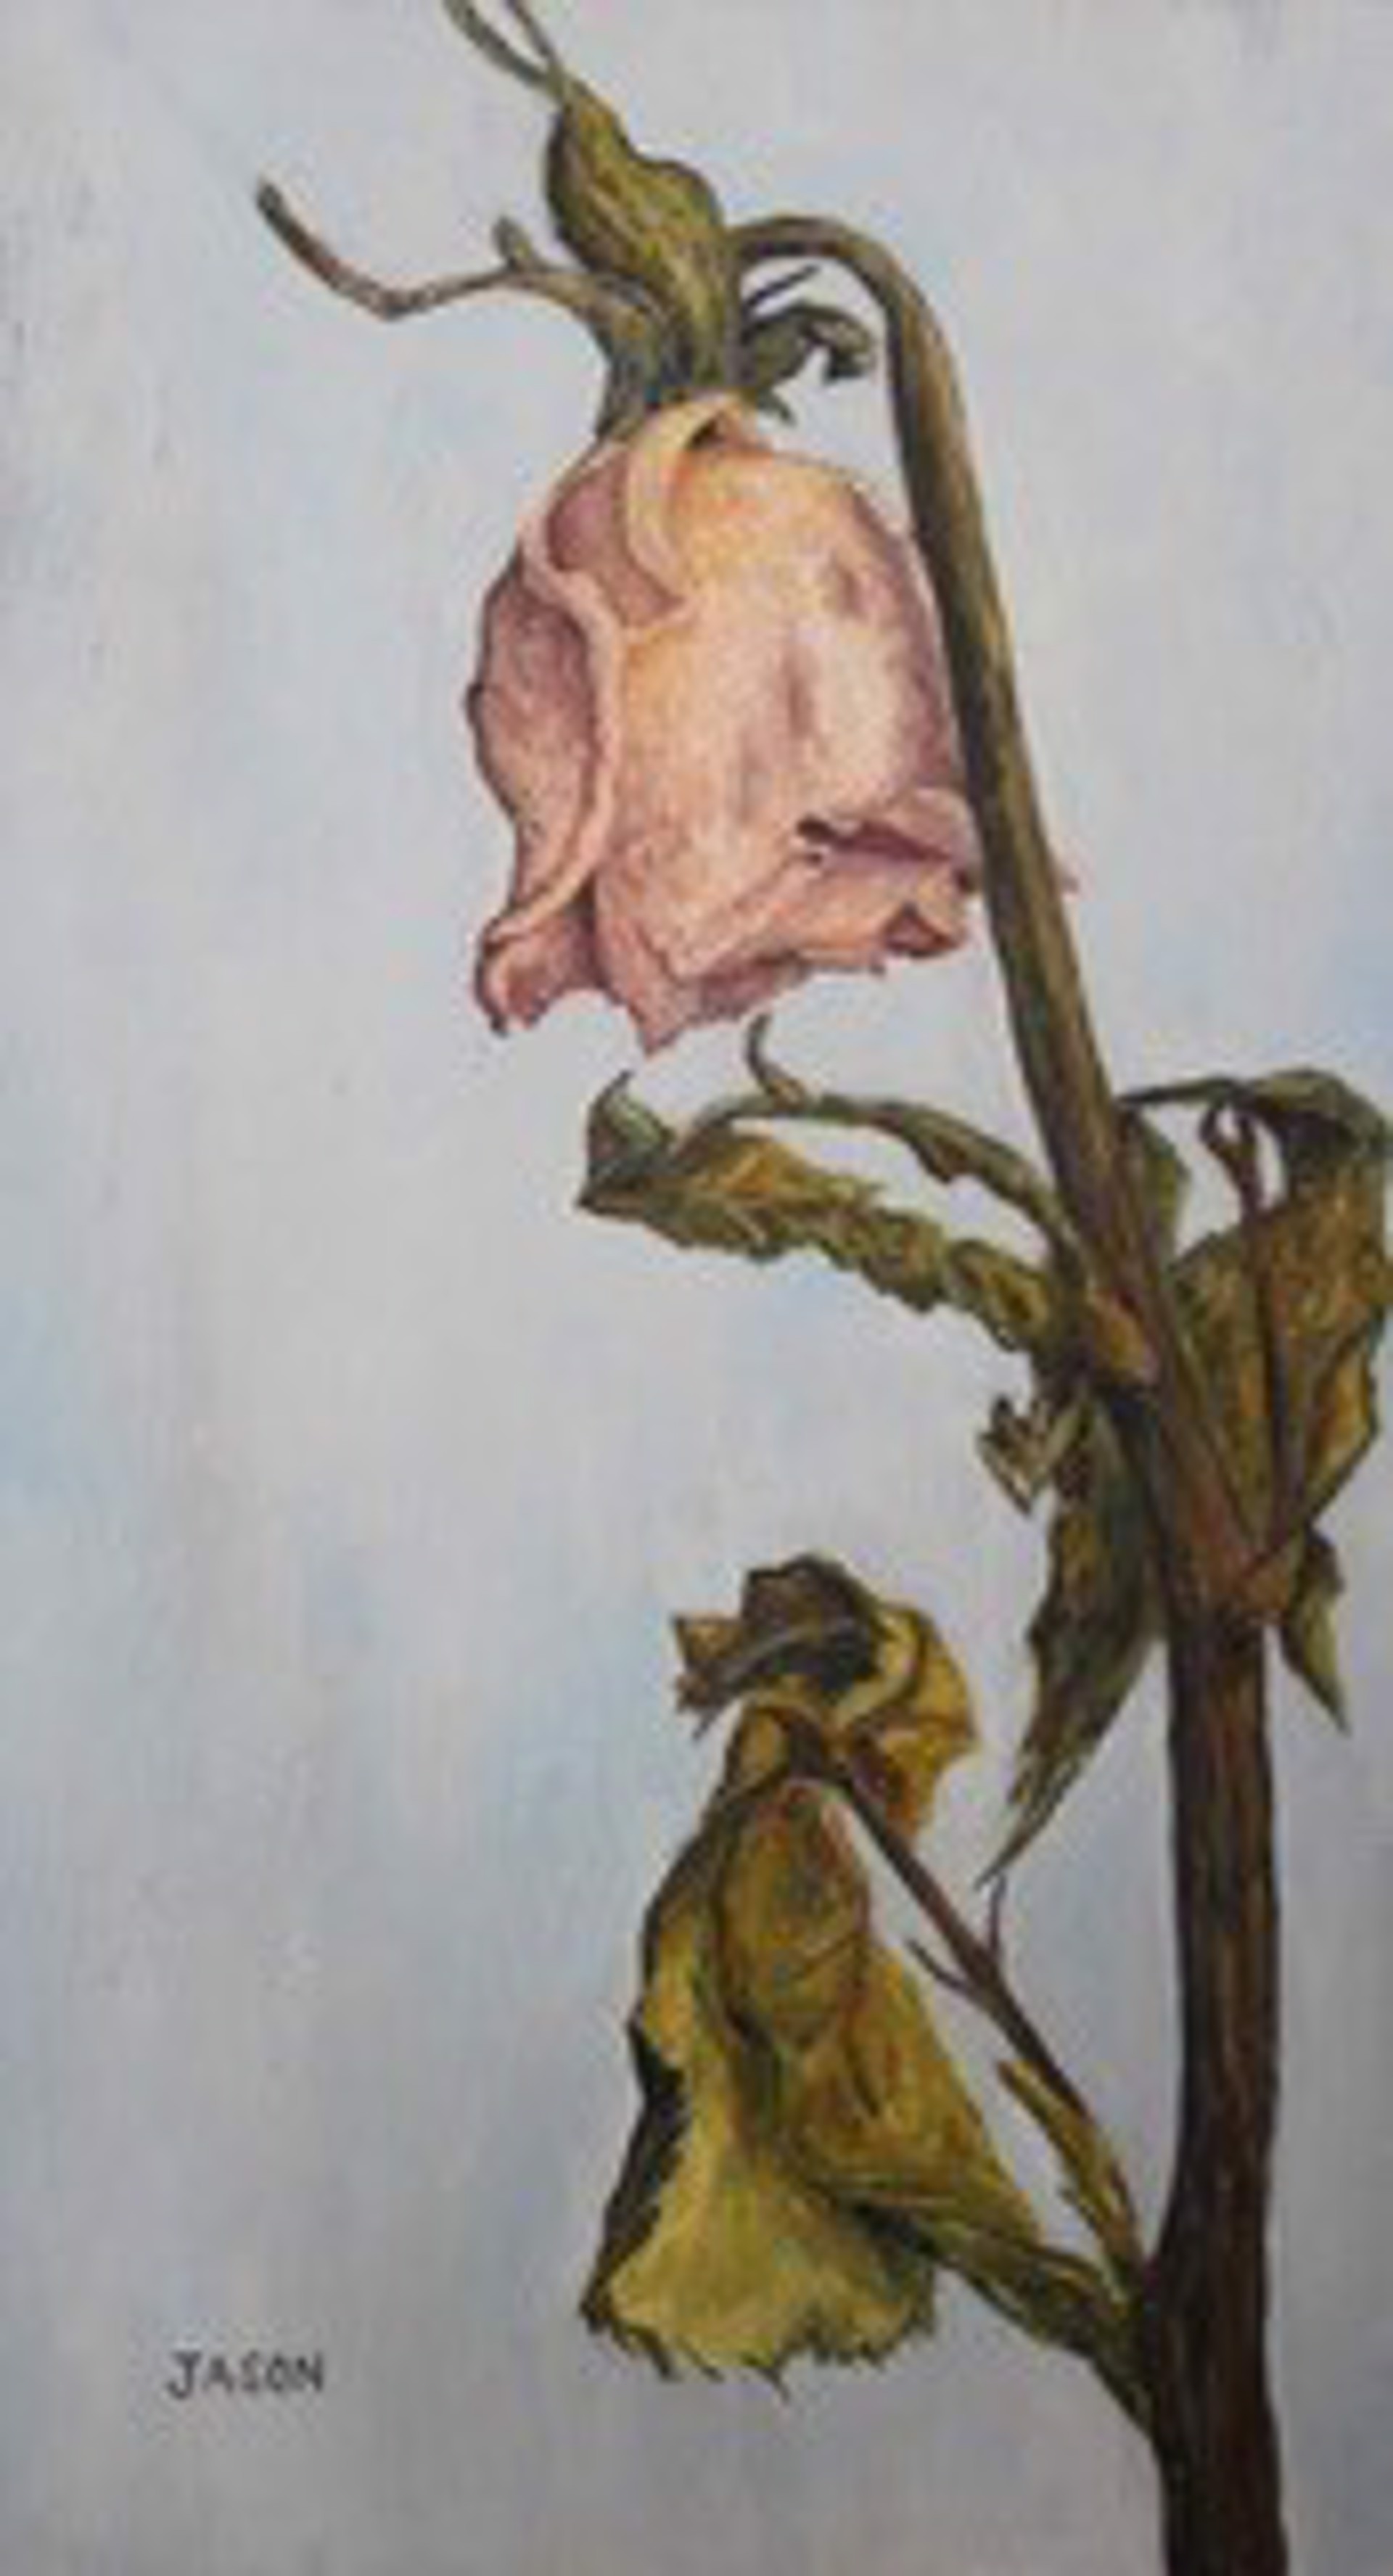 Autumn Rose #2 by Jason Berrier (Newberg, OR)